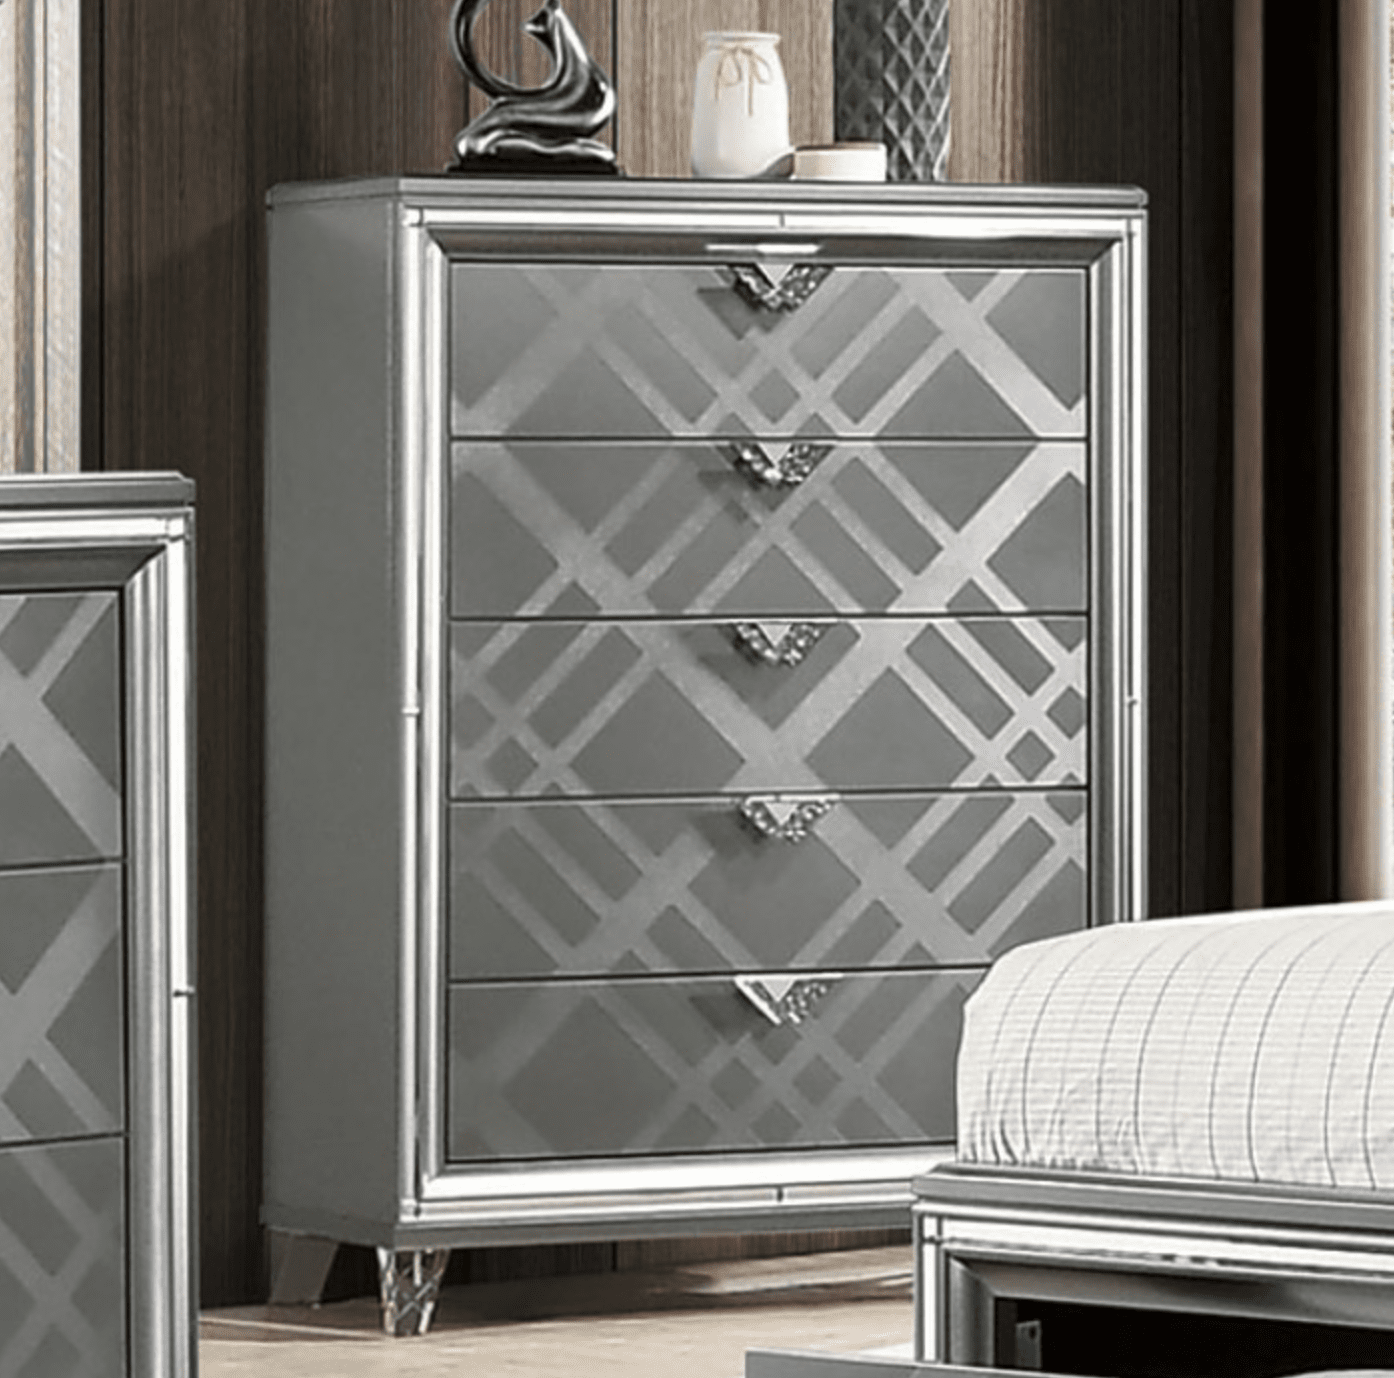 Emmeline Art Deco Style Queen Bed - Furniture of America 7147